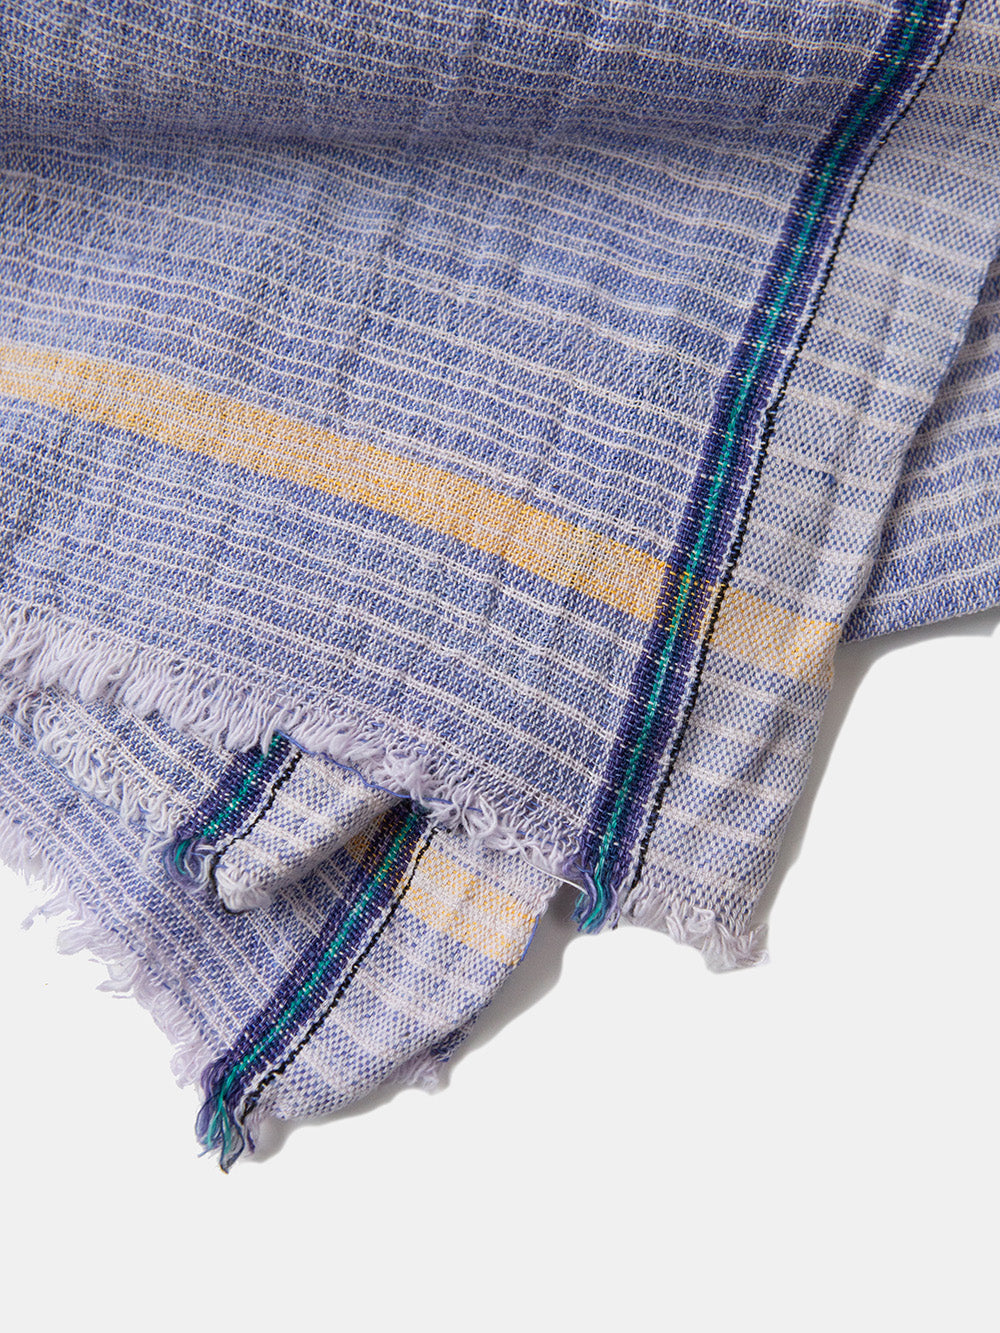 Khadi Cotton Towel in Blue